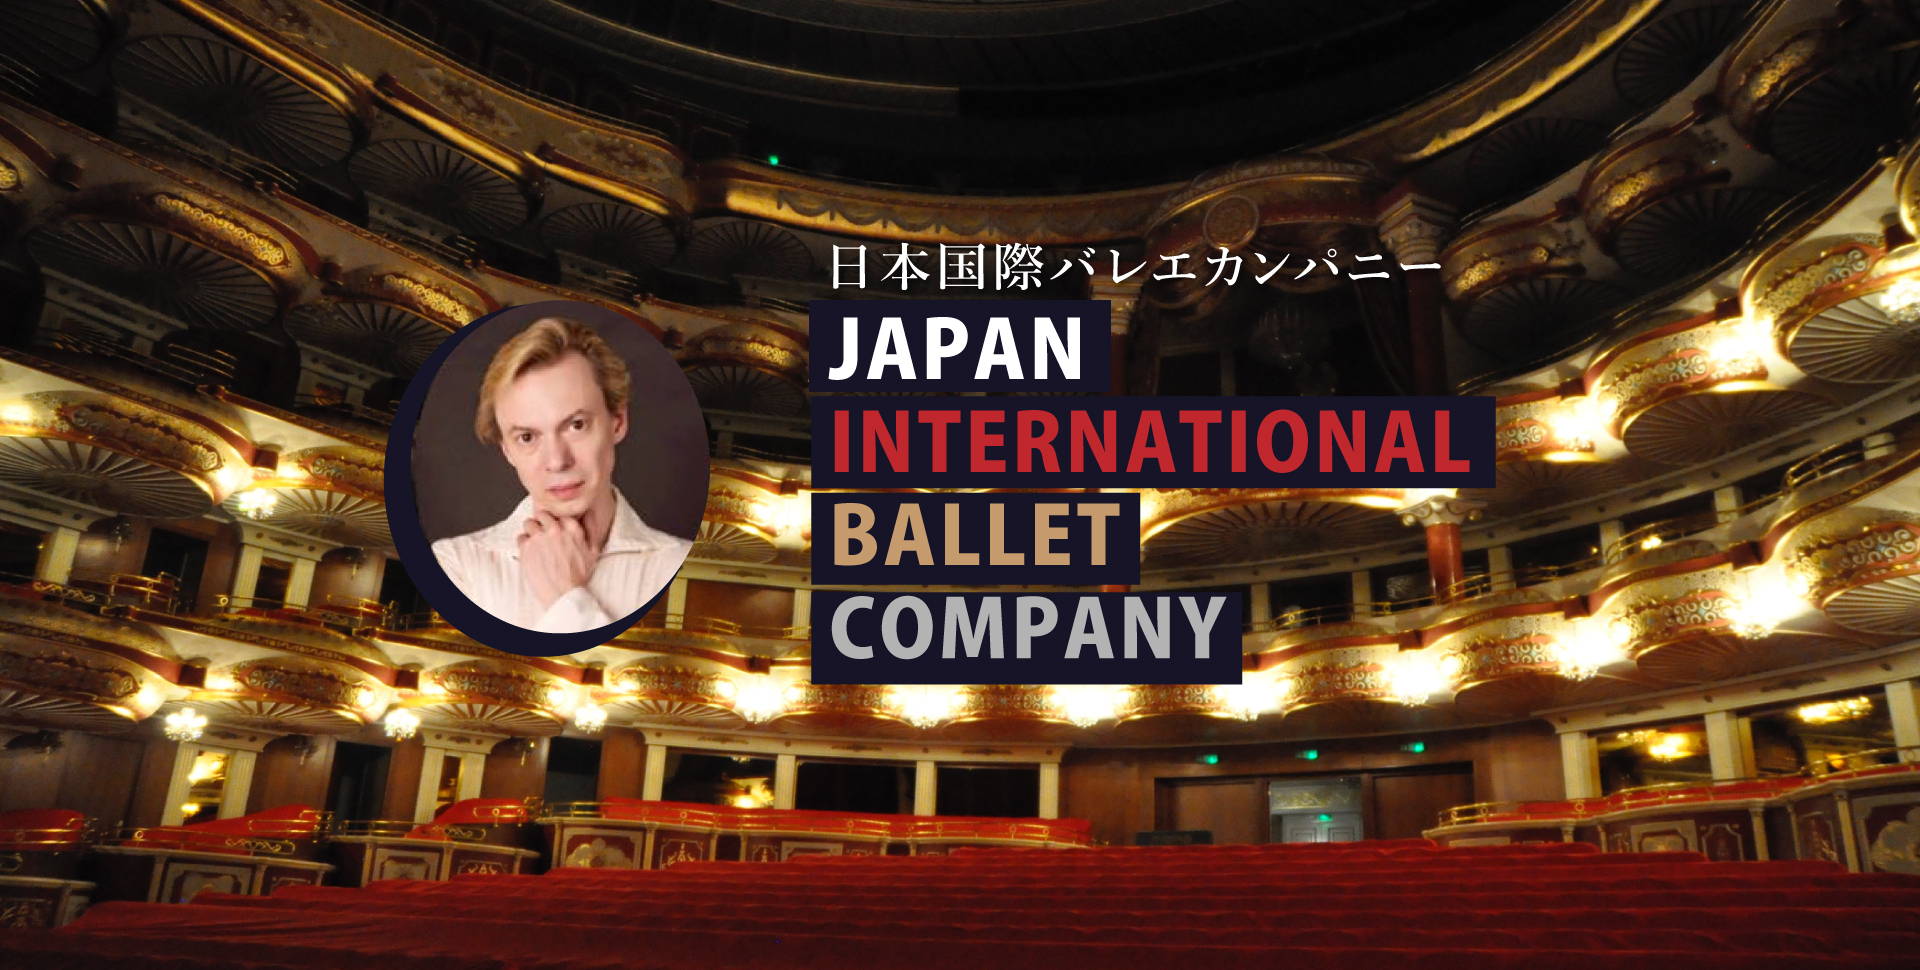 Japan International Ballet Company